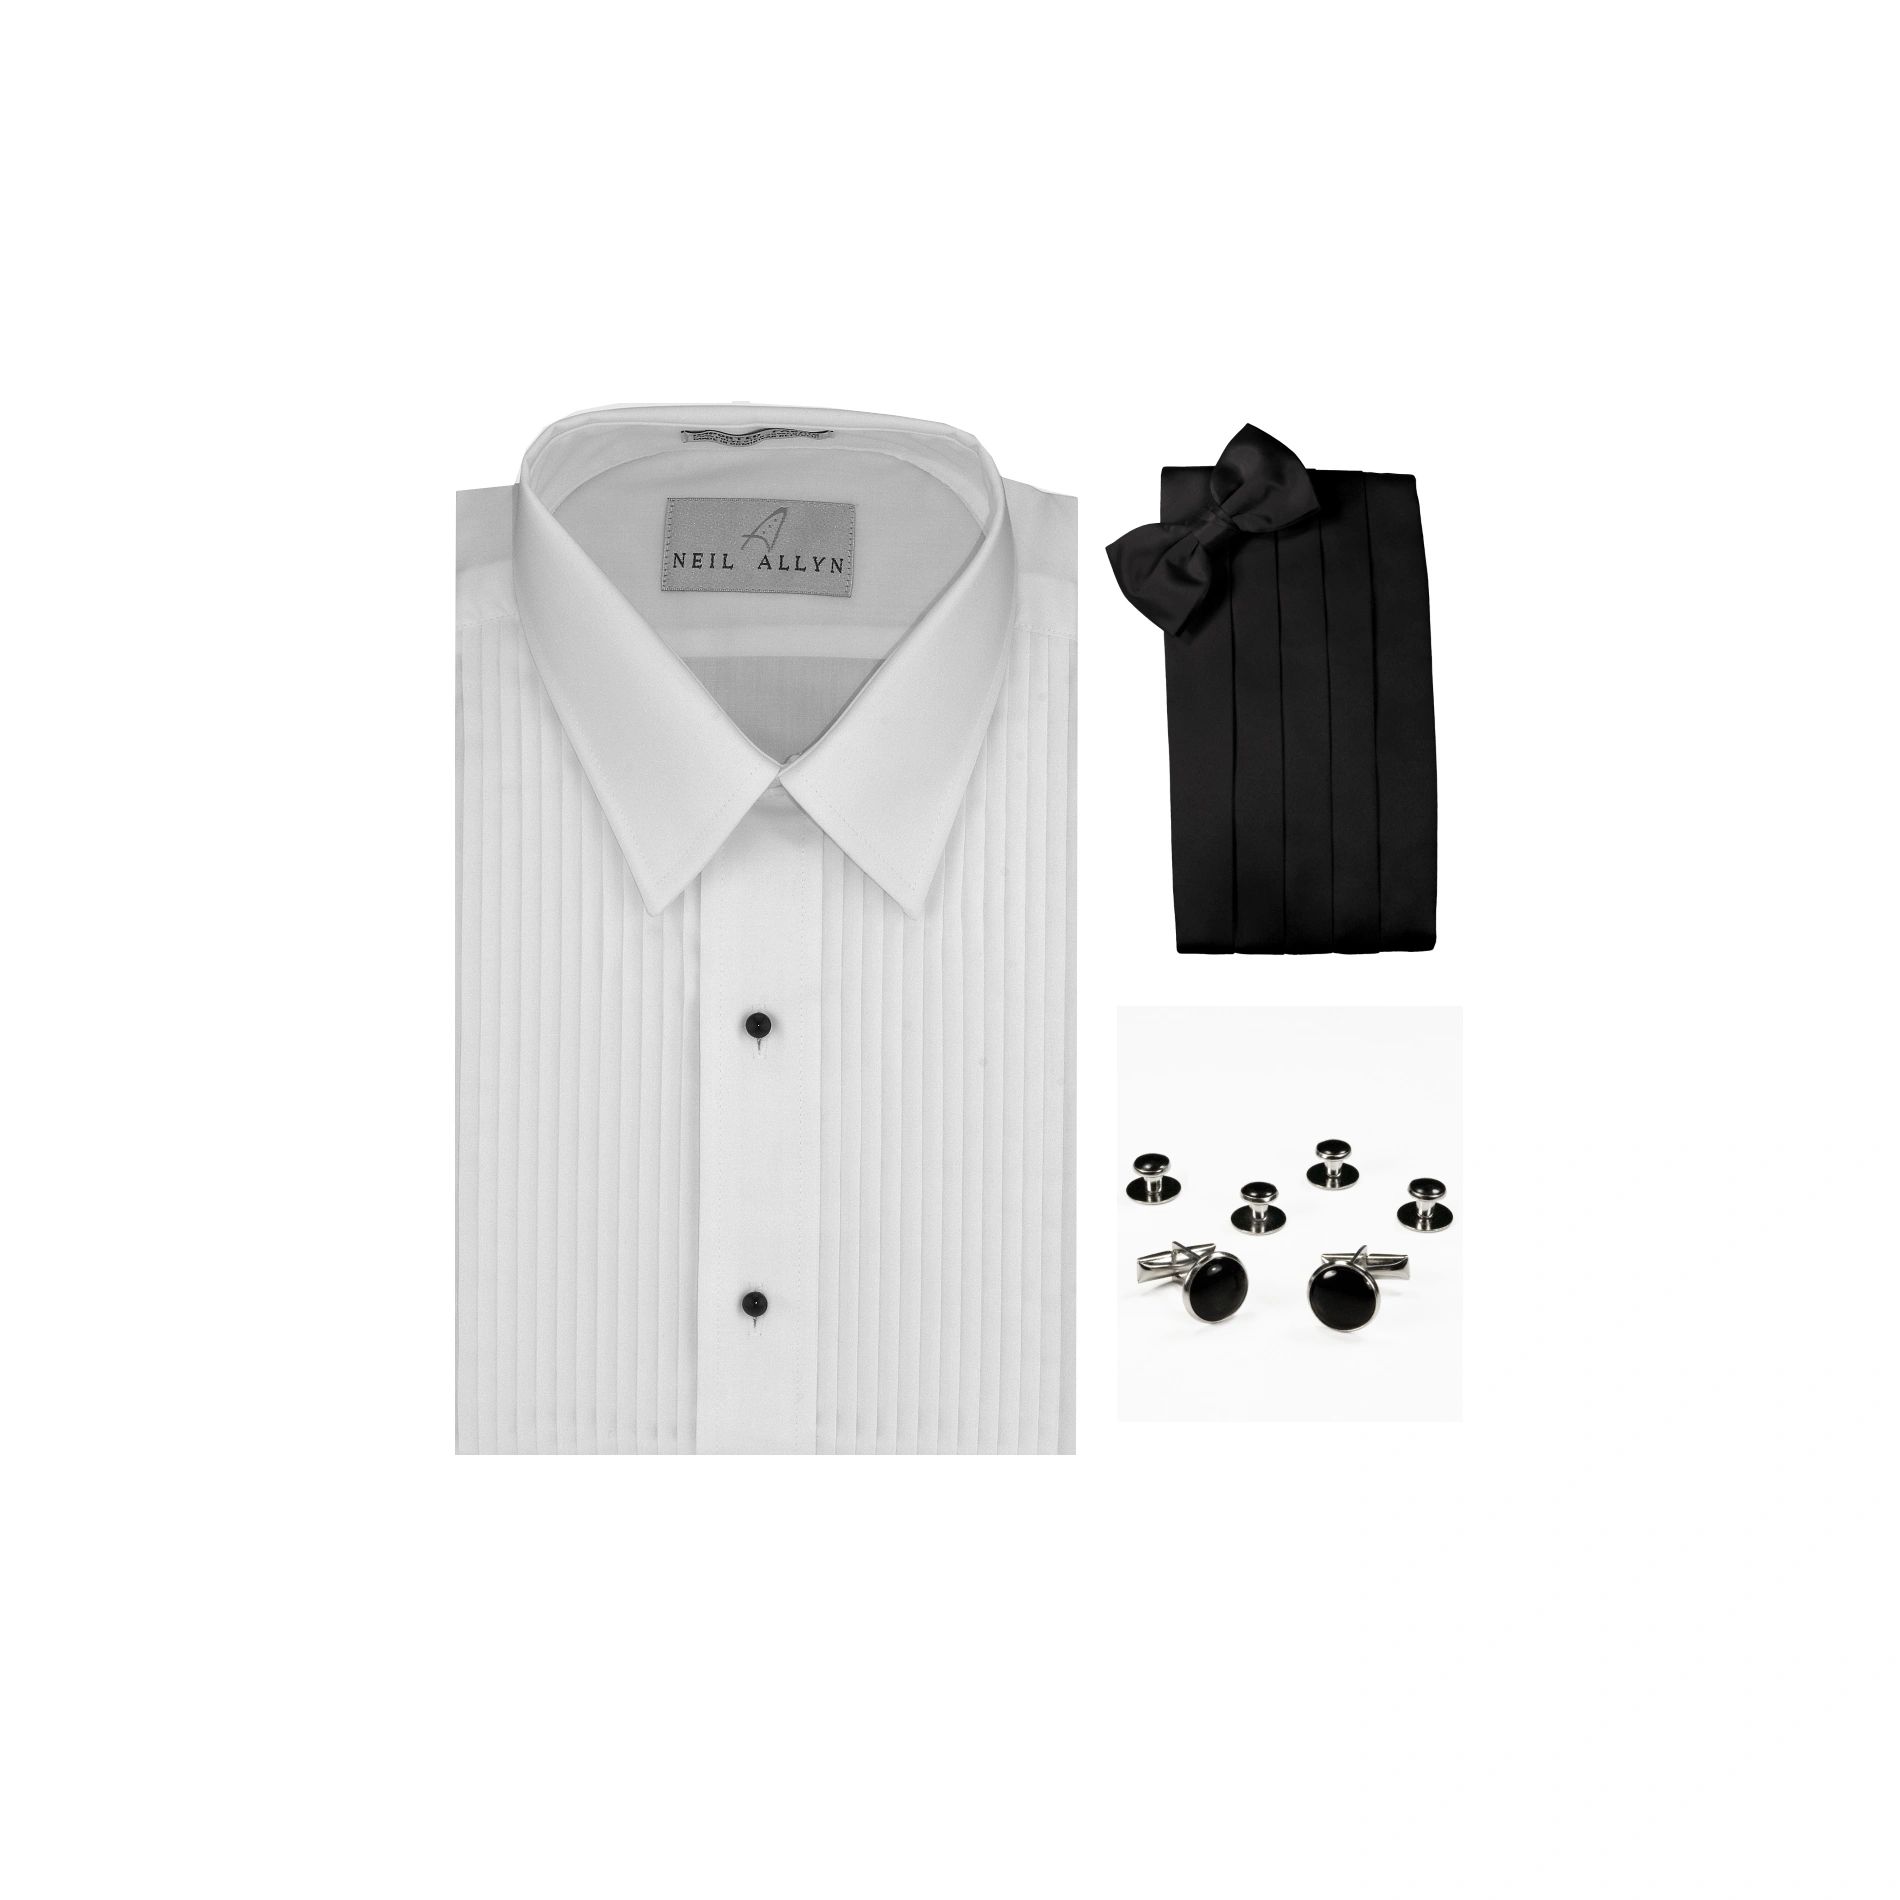 Neil Allyn Lay-Down Collar 1/4" Pleats Formal Tuxedo Shirt, Cummerbund, Bow-Tie, Cuff Links and Studs Set